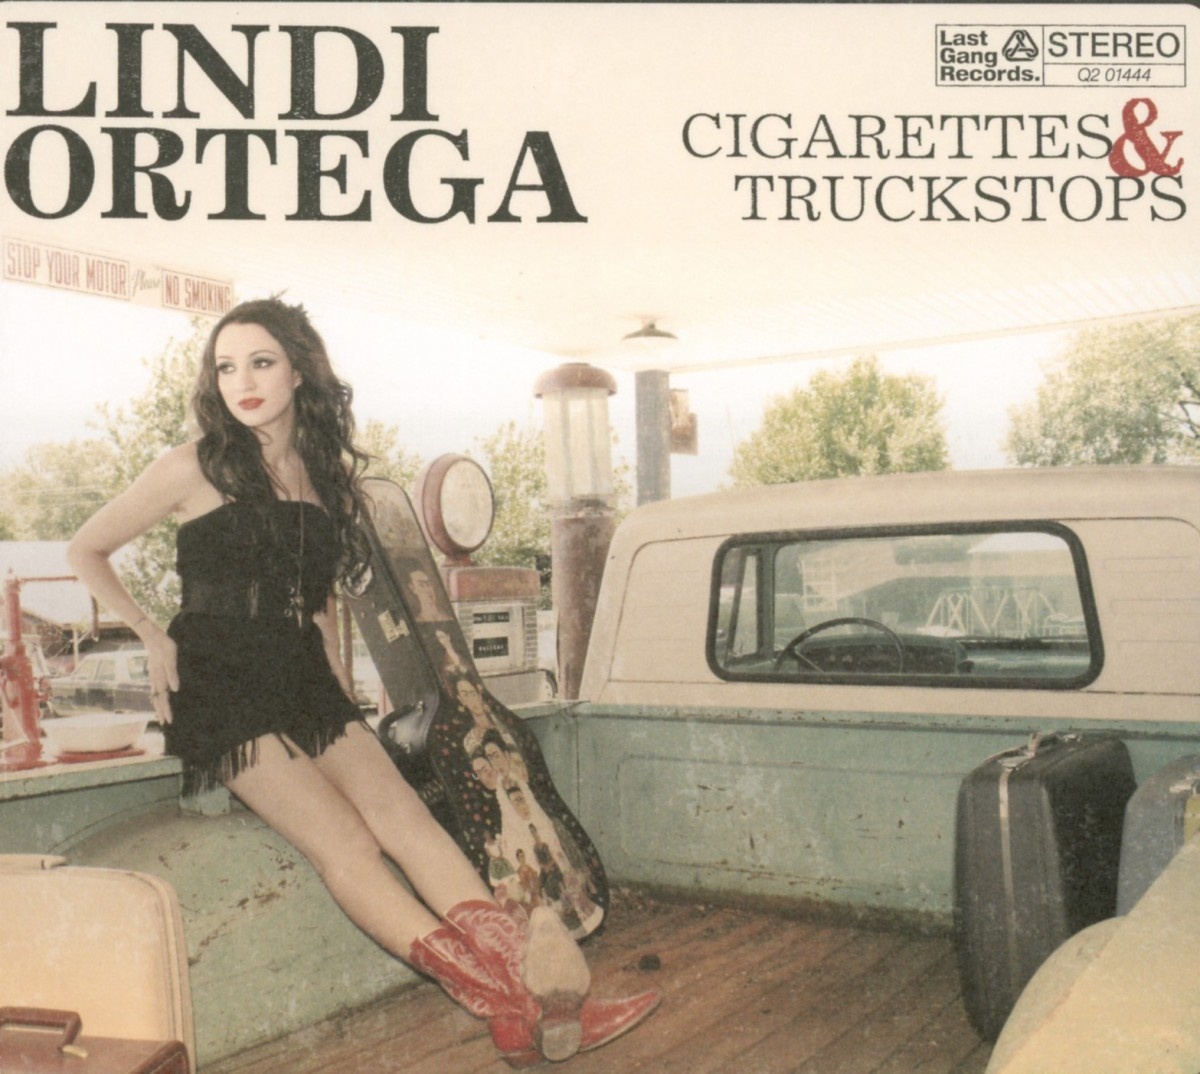 Cigarettes & Truckstops - Lindi Ortega. (CD)